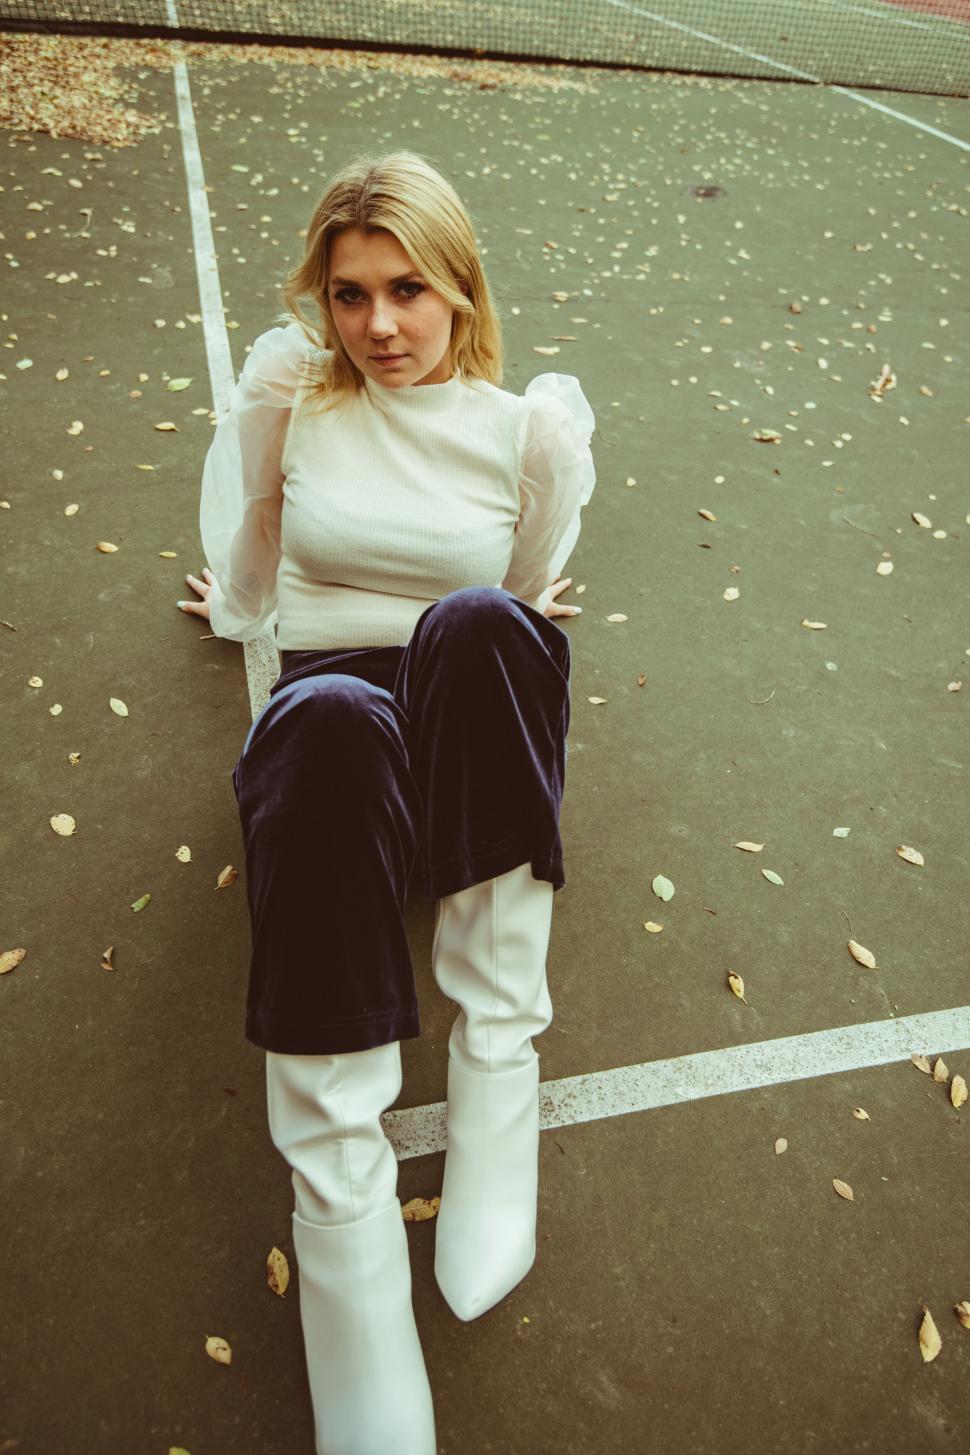 Free Image of Elegant blonde seated on tennis court 